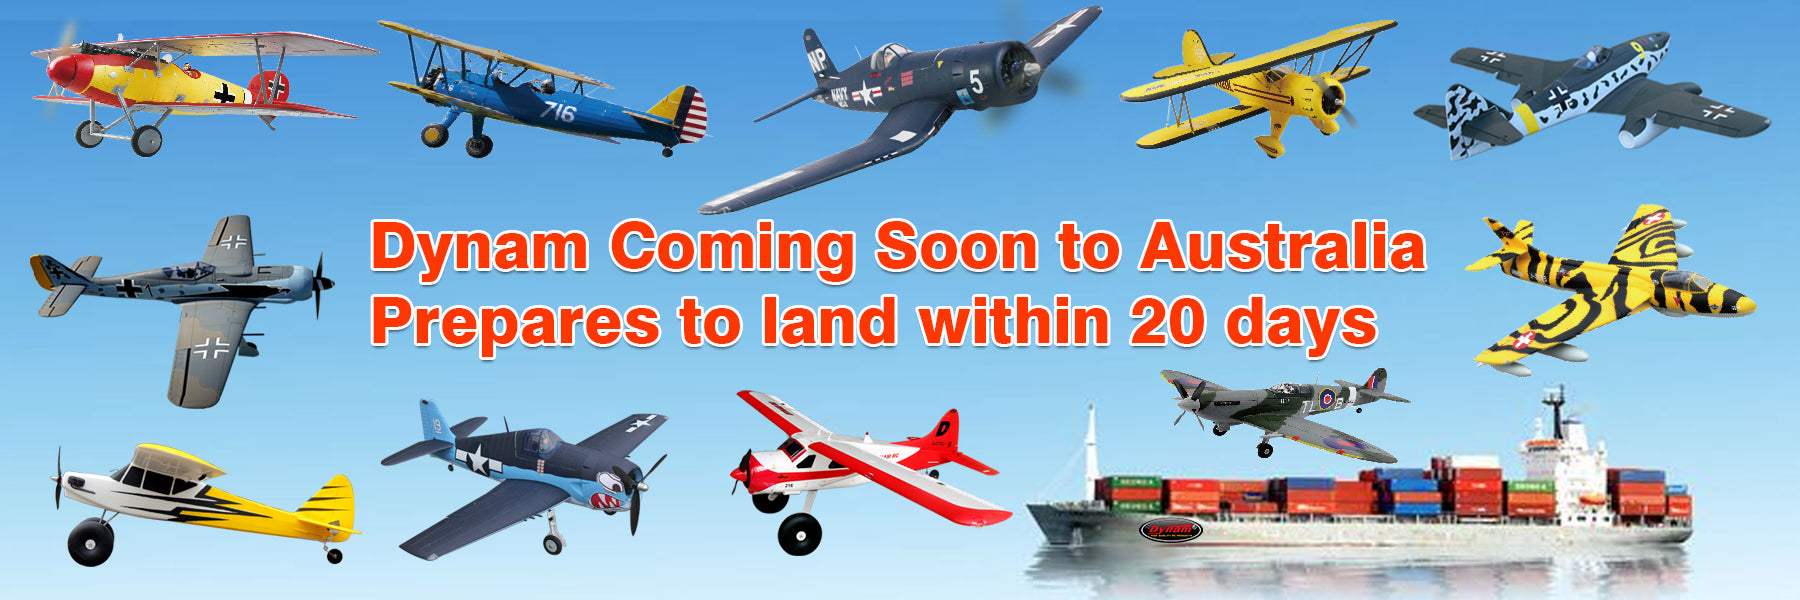 Dynam RC Planes Coming Soon to Australia